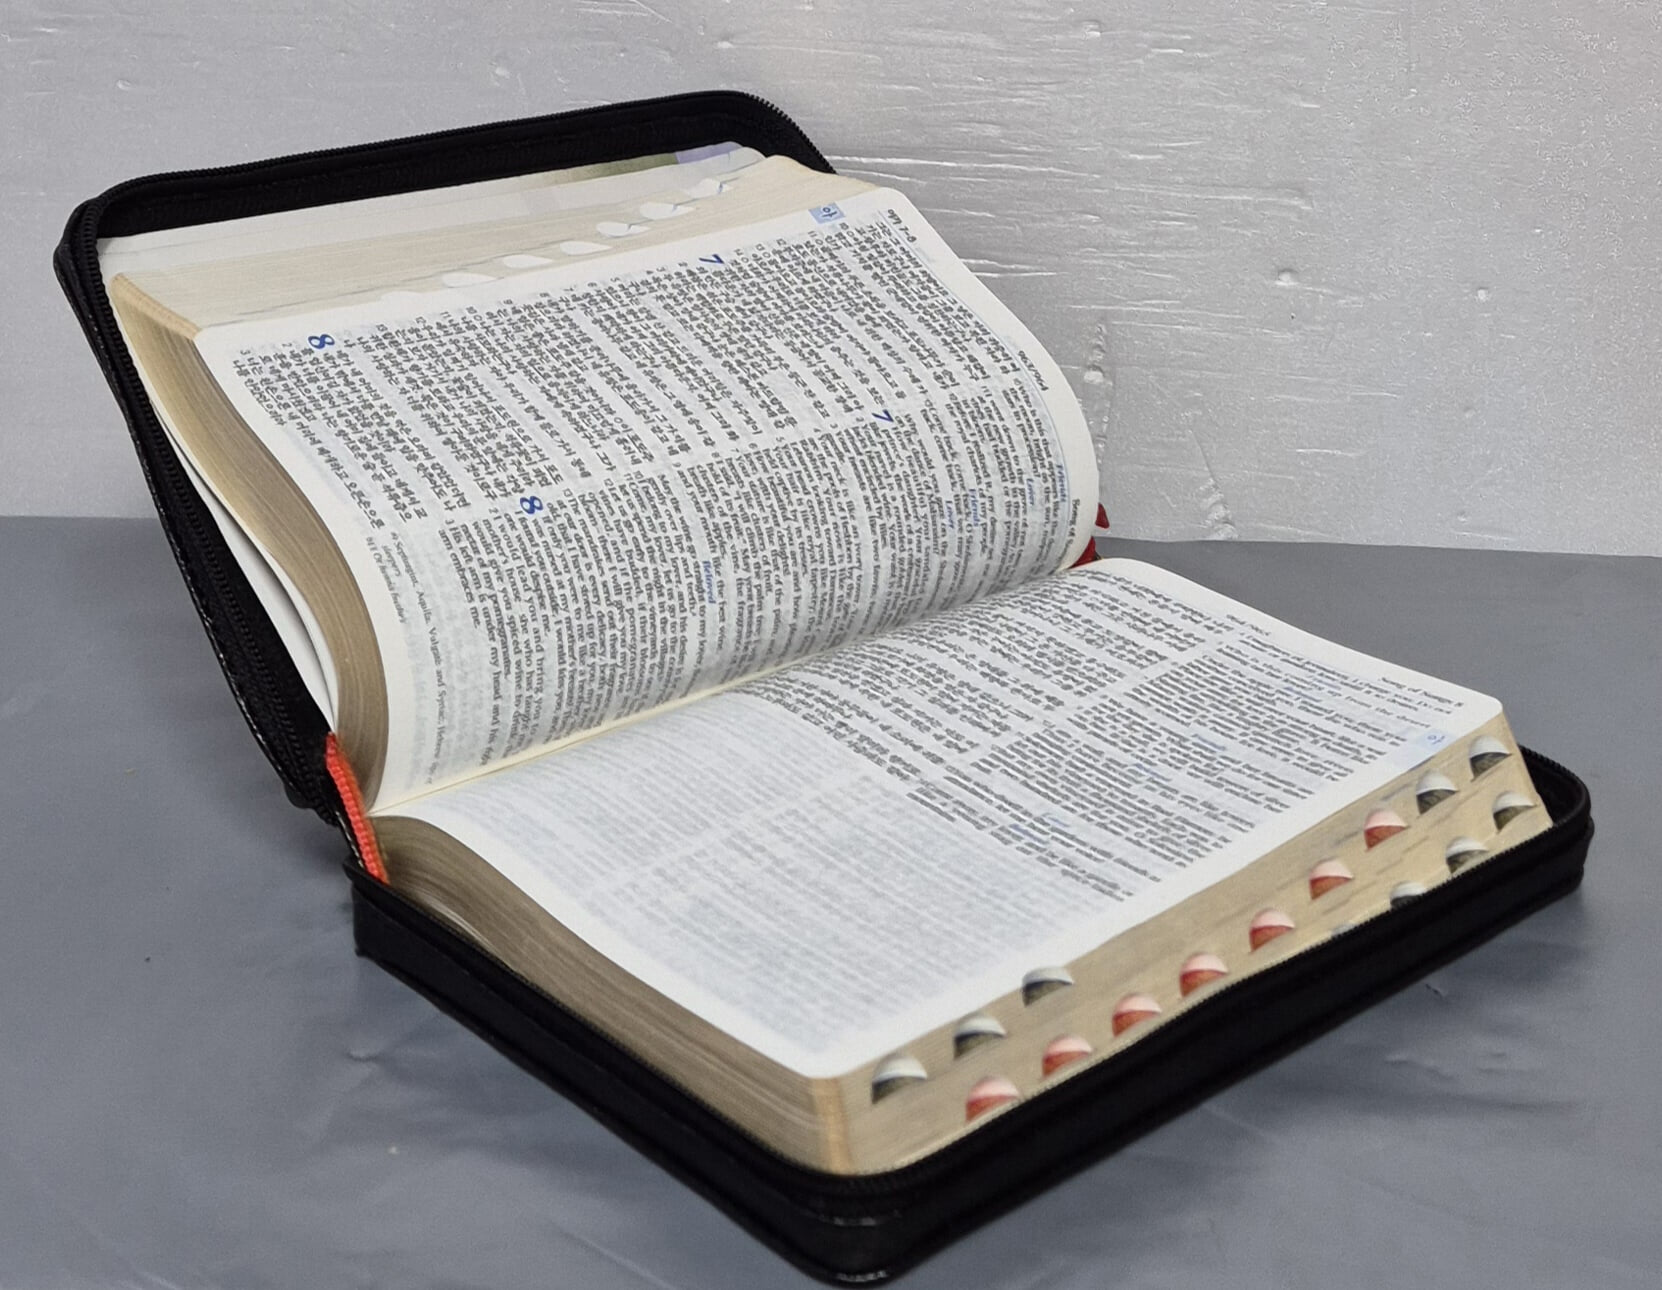 NIV 한영 성경전서 찬송가 - 지퍼, 색인, 금박, 합본